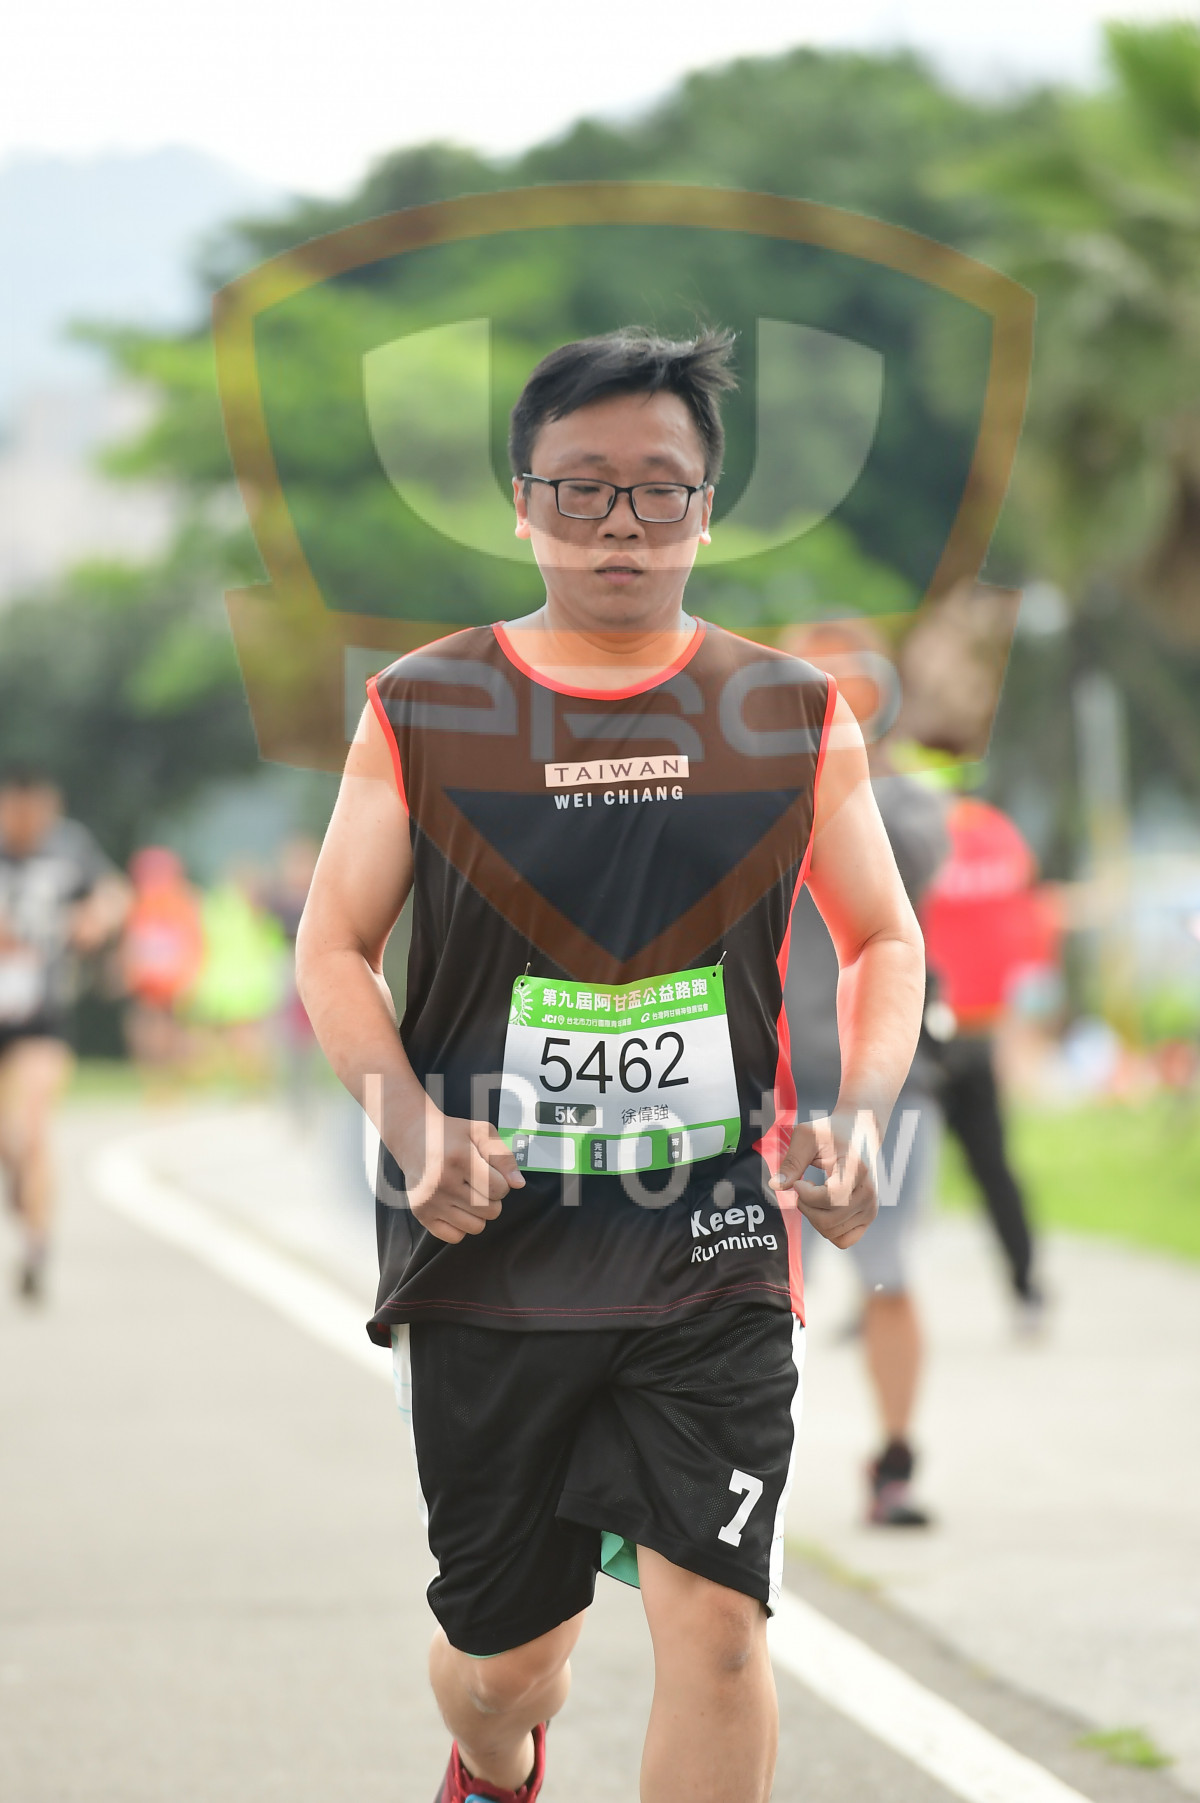 TAIW A N,WEI CHIANG,,5462,,Keep,Running|終點1|中年人